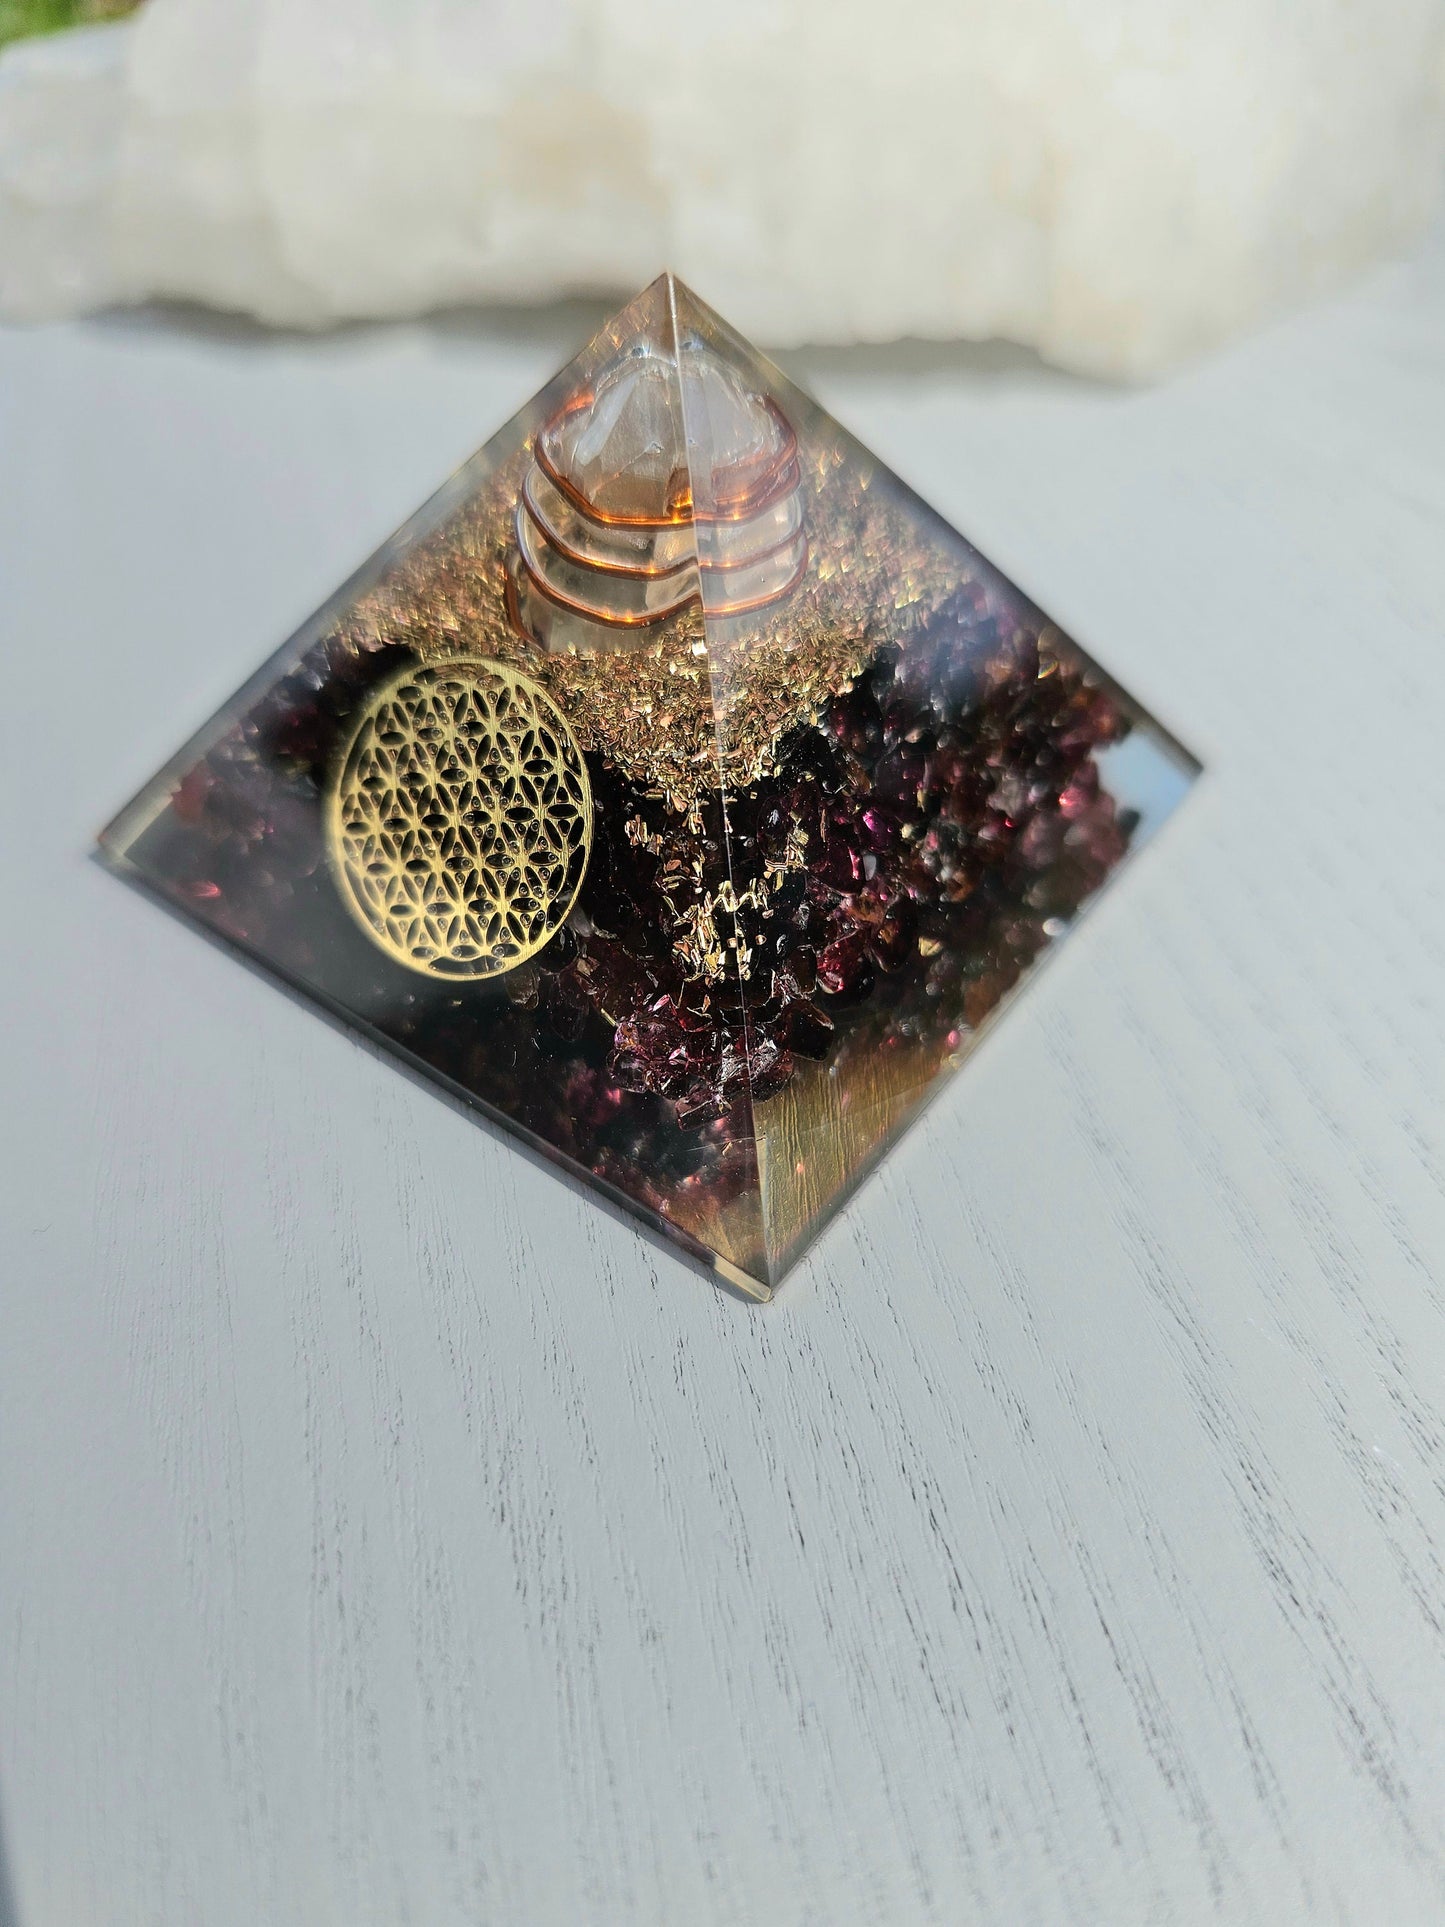 Garnet resin pyramid - Flower of life